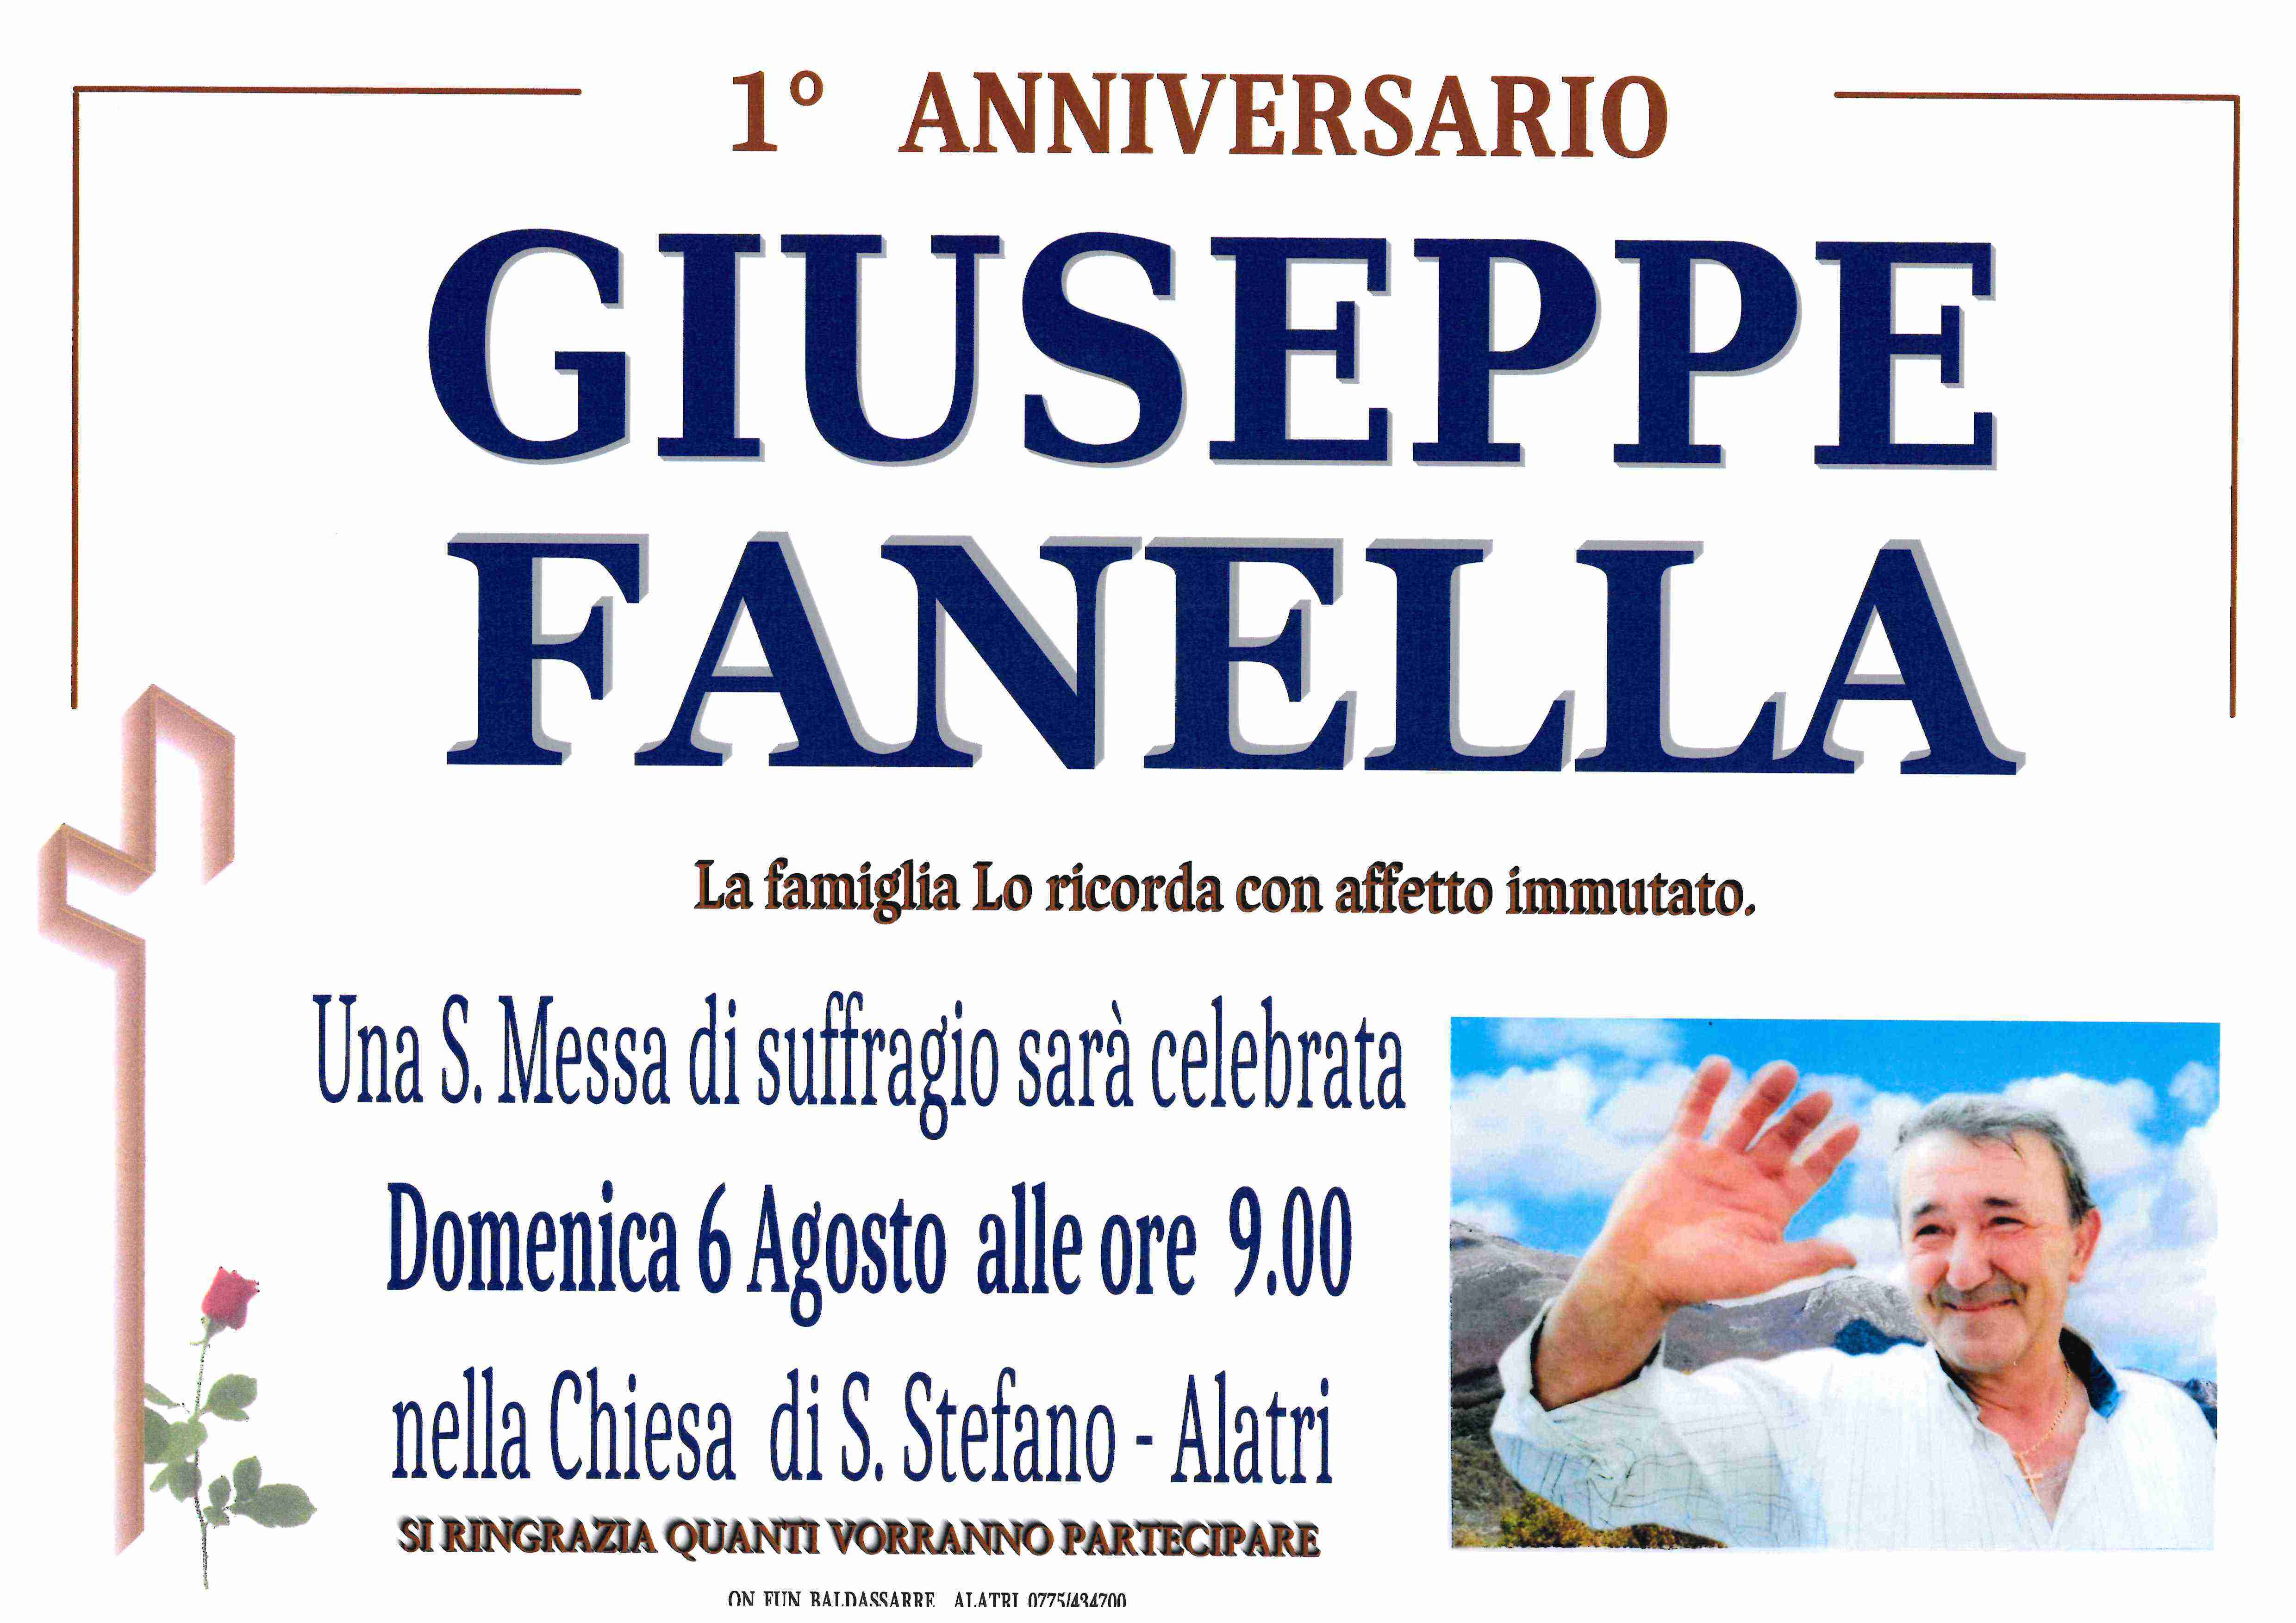 Giuseppe Fanella